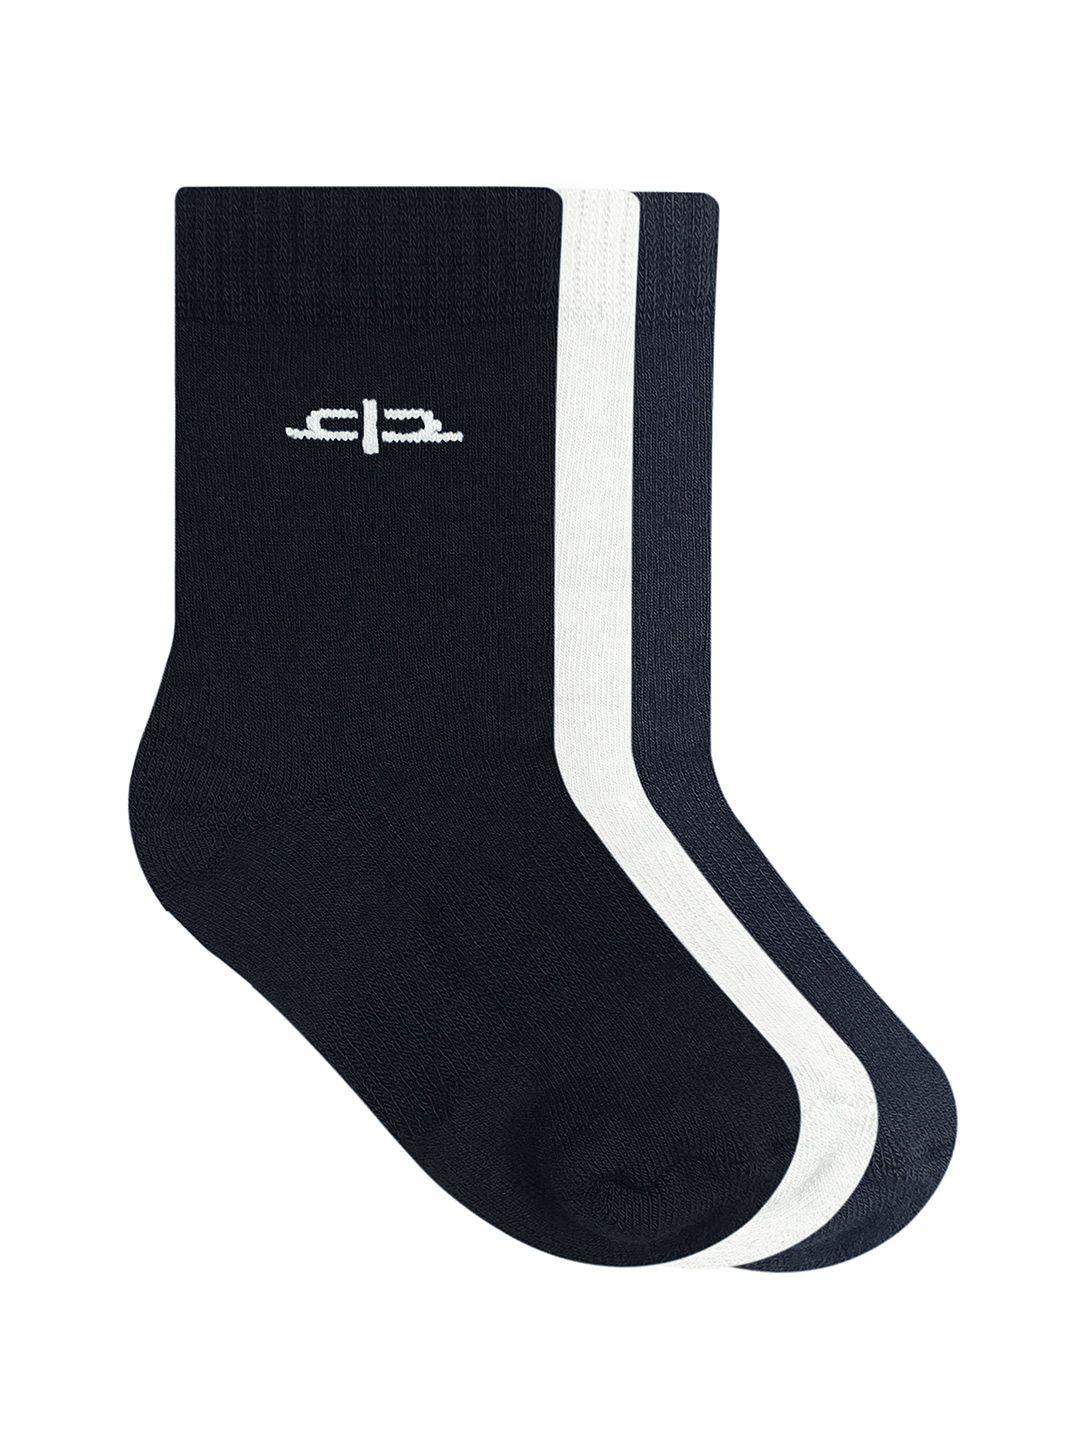 heelium kids set of 3 black & grey solid bamboo calf length socks